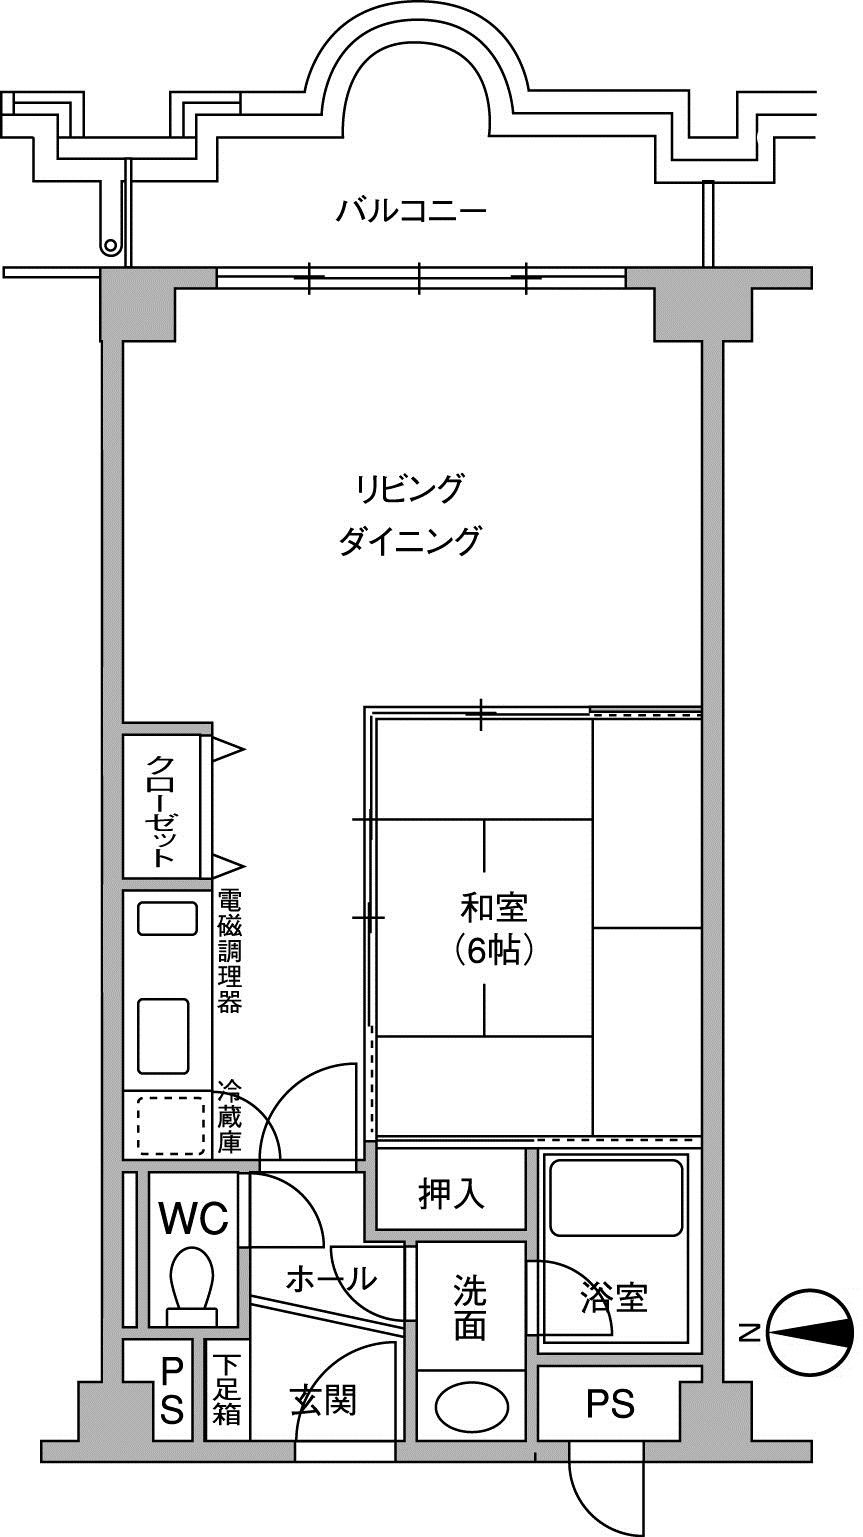 Floor plan. 1LDK, Price 4.7 million yen, Footprint 50 sq m , Balcony area 7.91 sq m